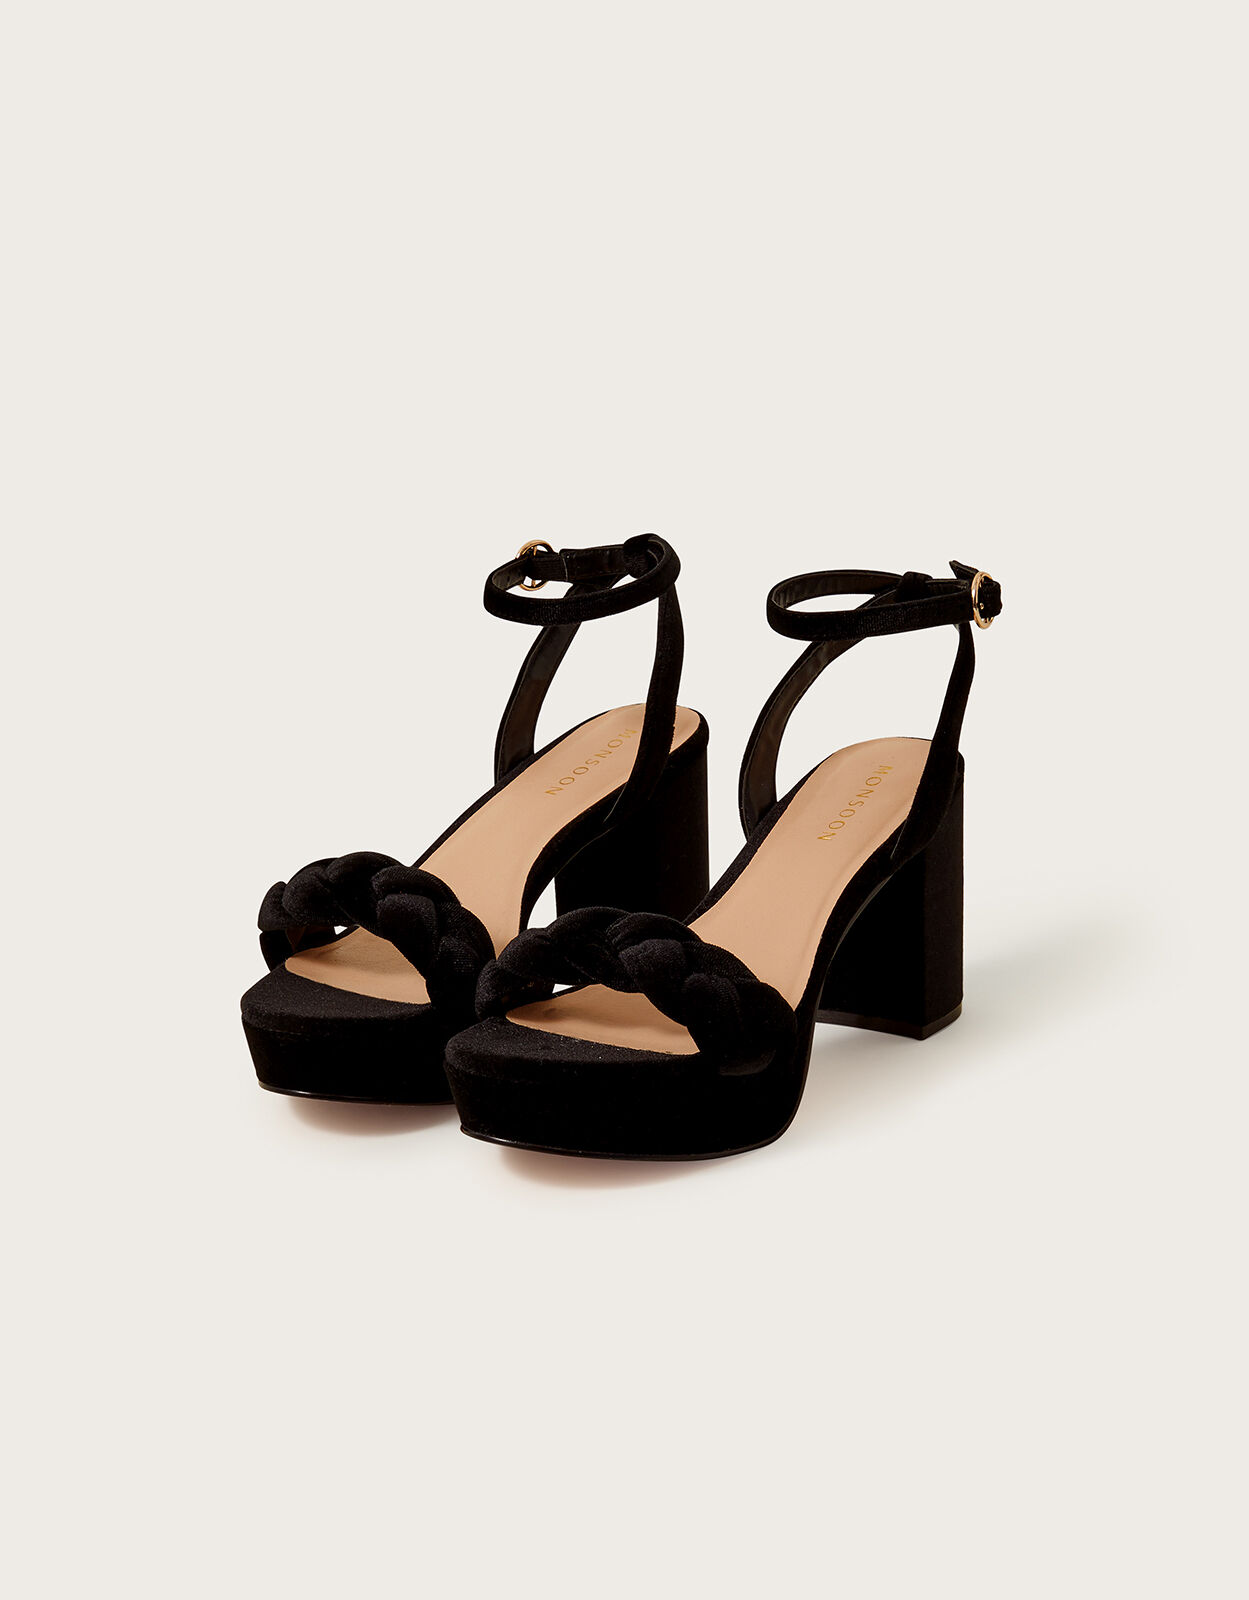 Black Cross Strap Block Heel Sandal | Shoes | Block heels sandal, Sandals  heels, Black strappy heels